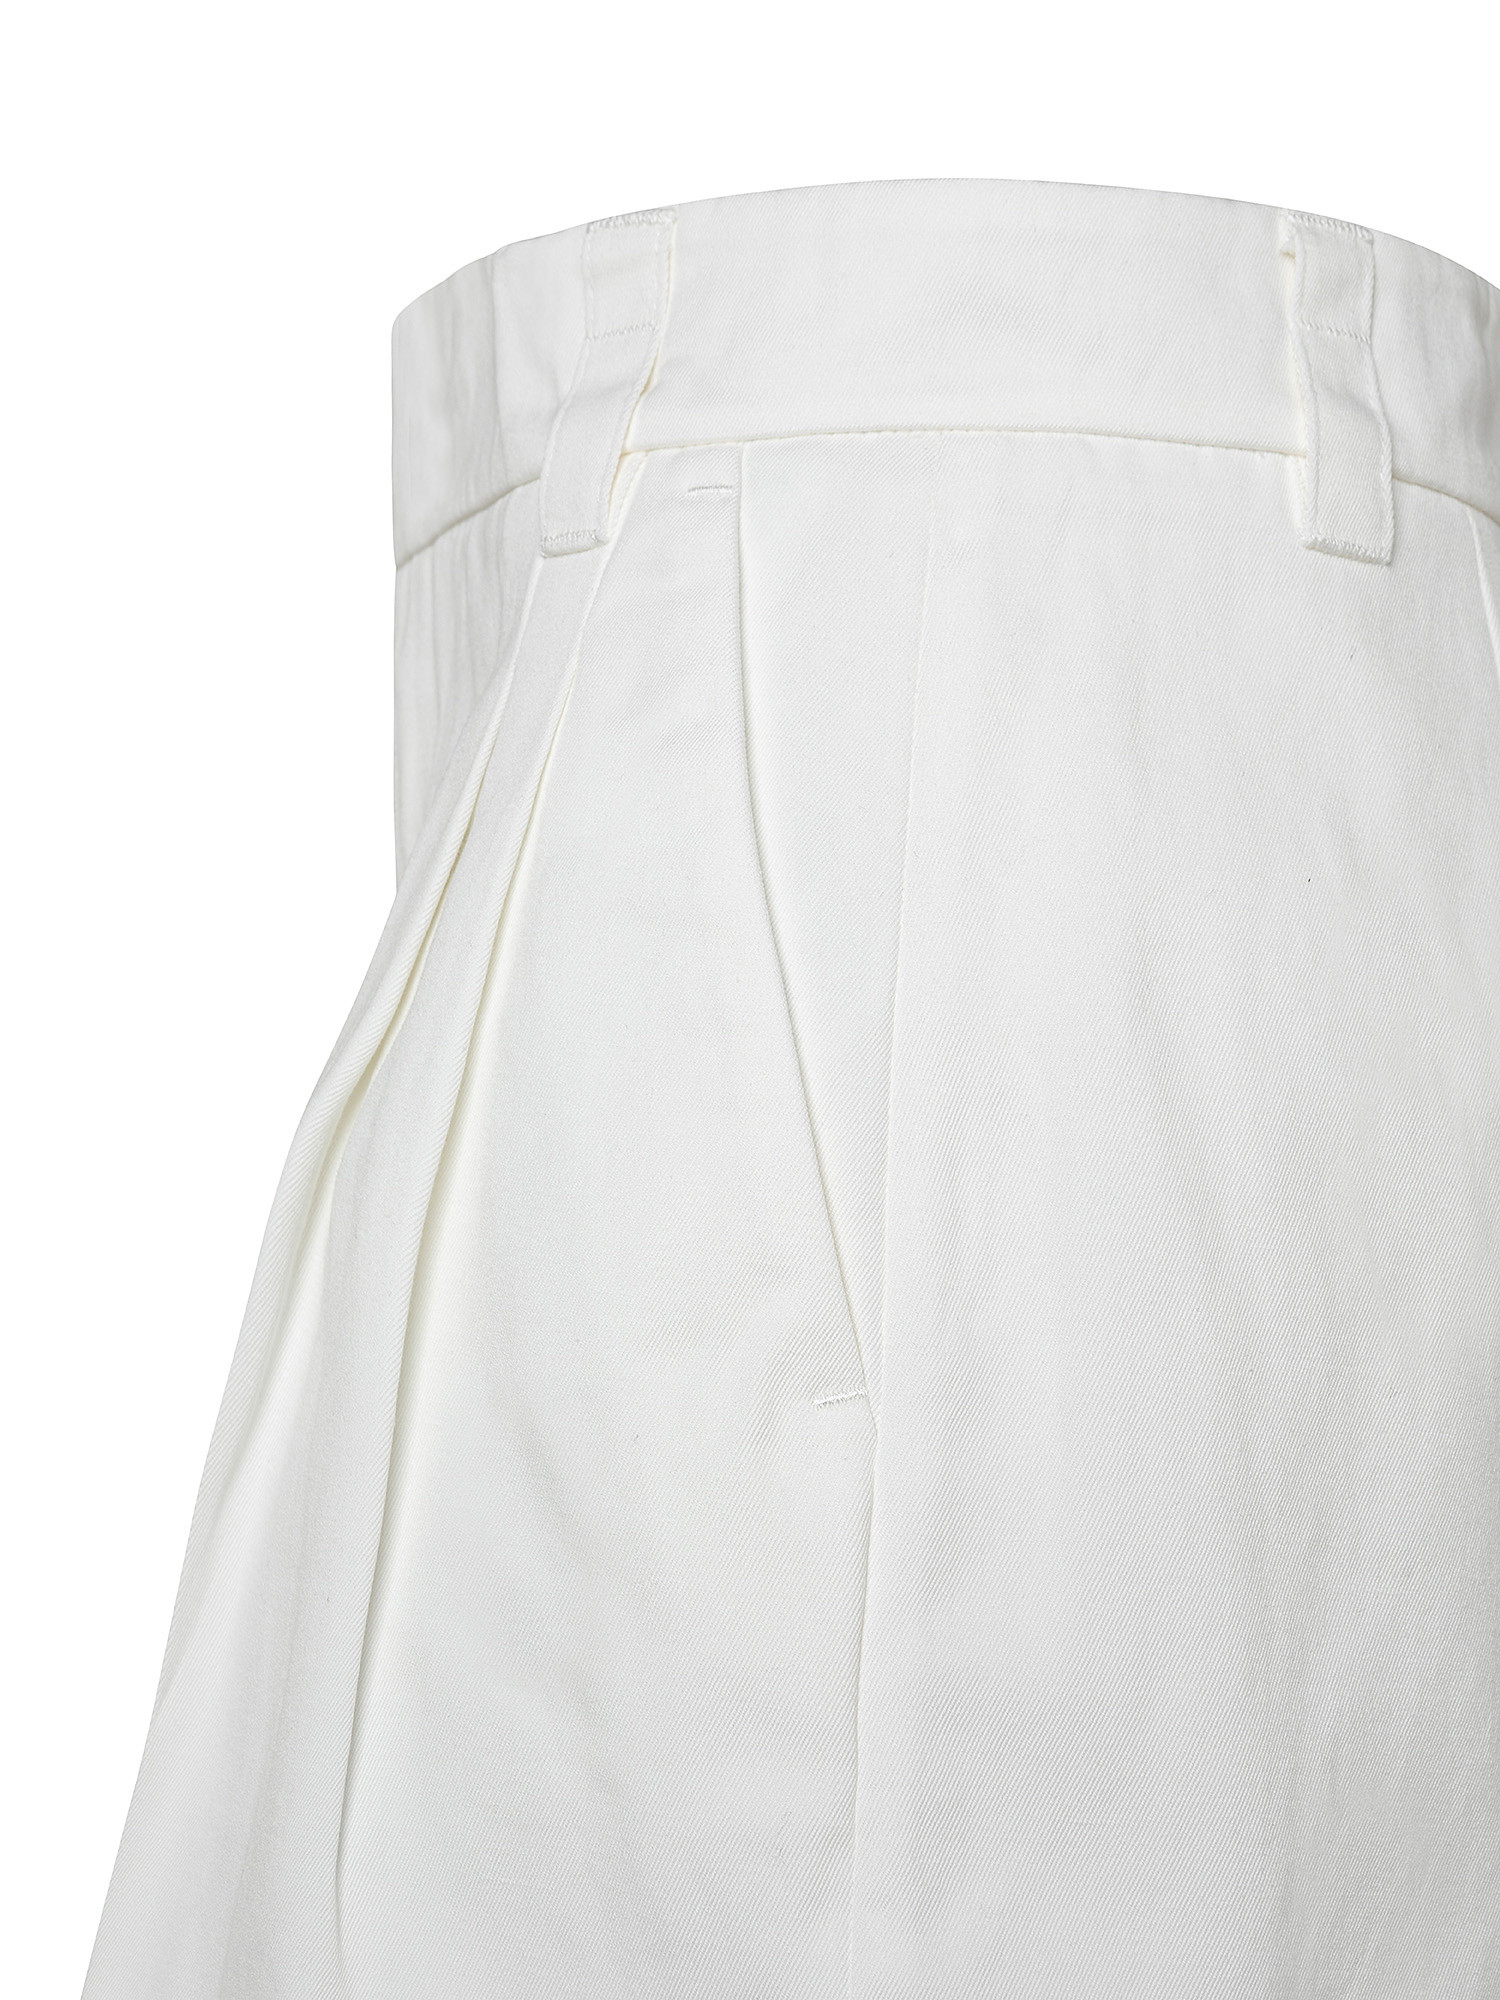 Shorts in raso opaco con cintura, Bianco, large